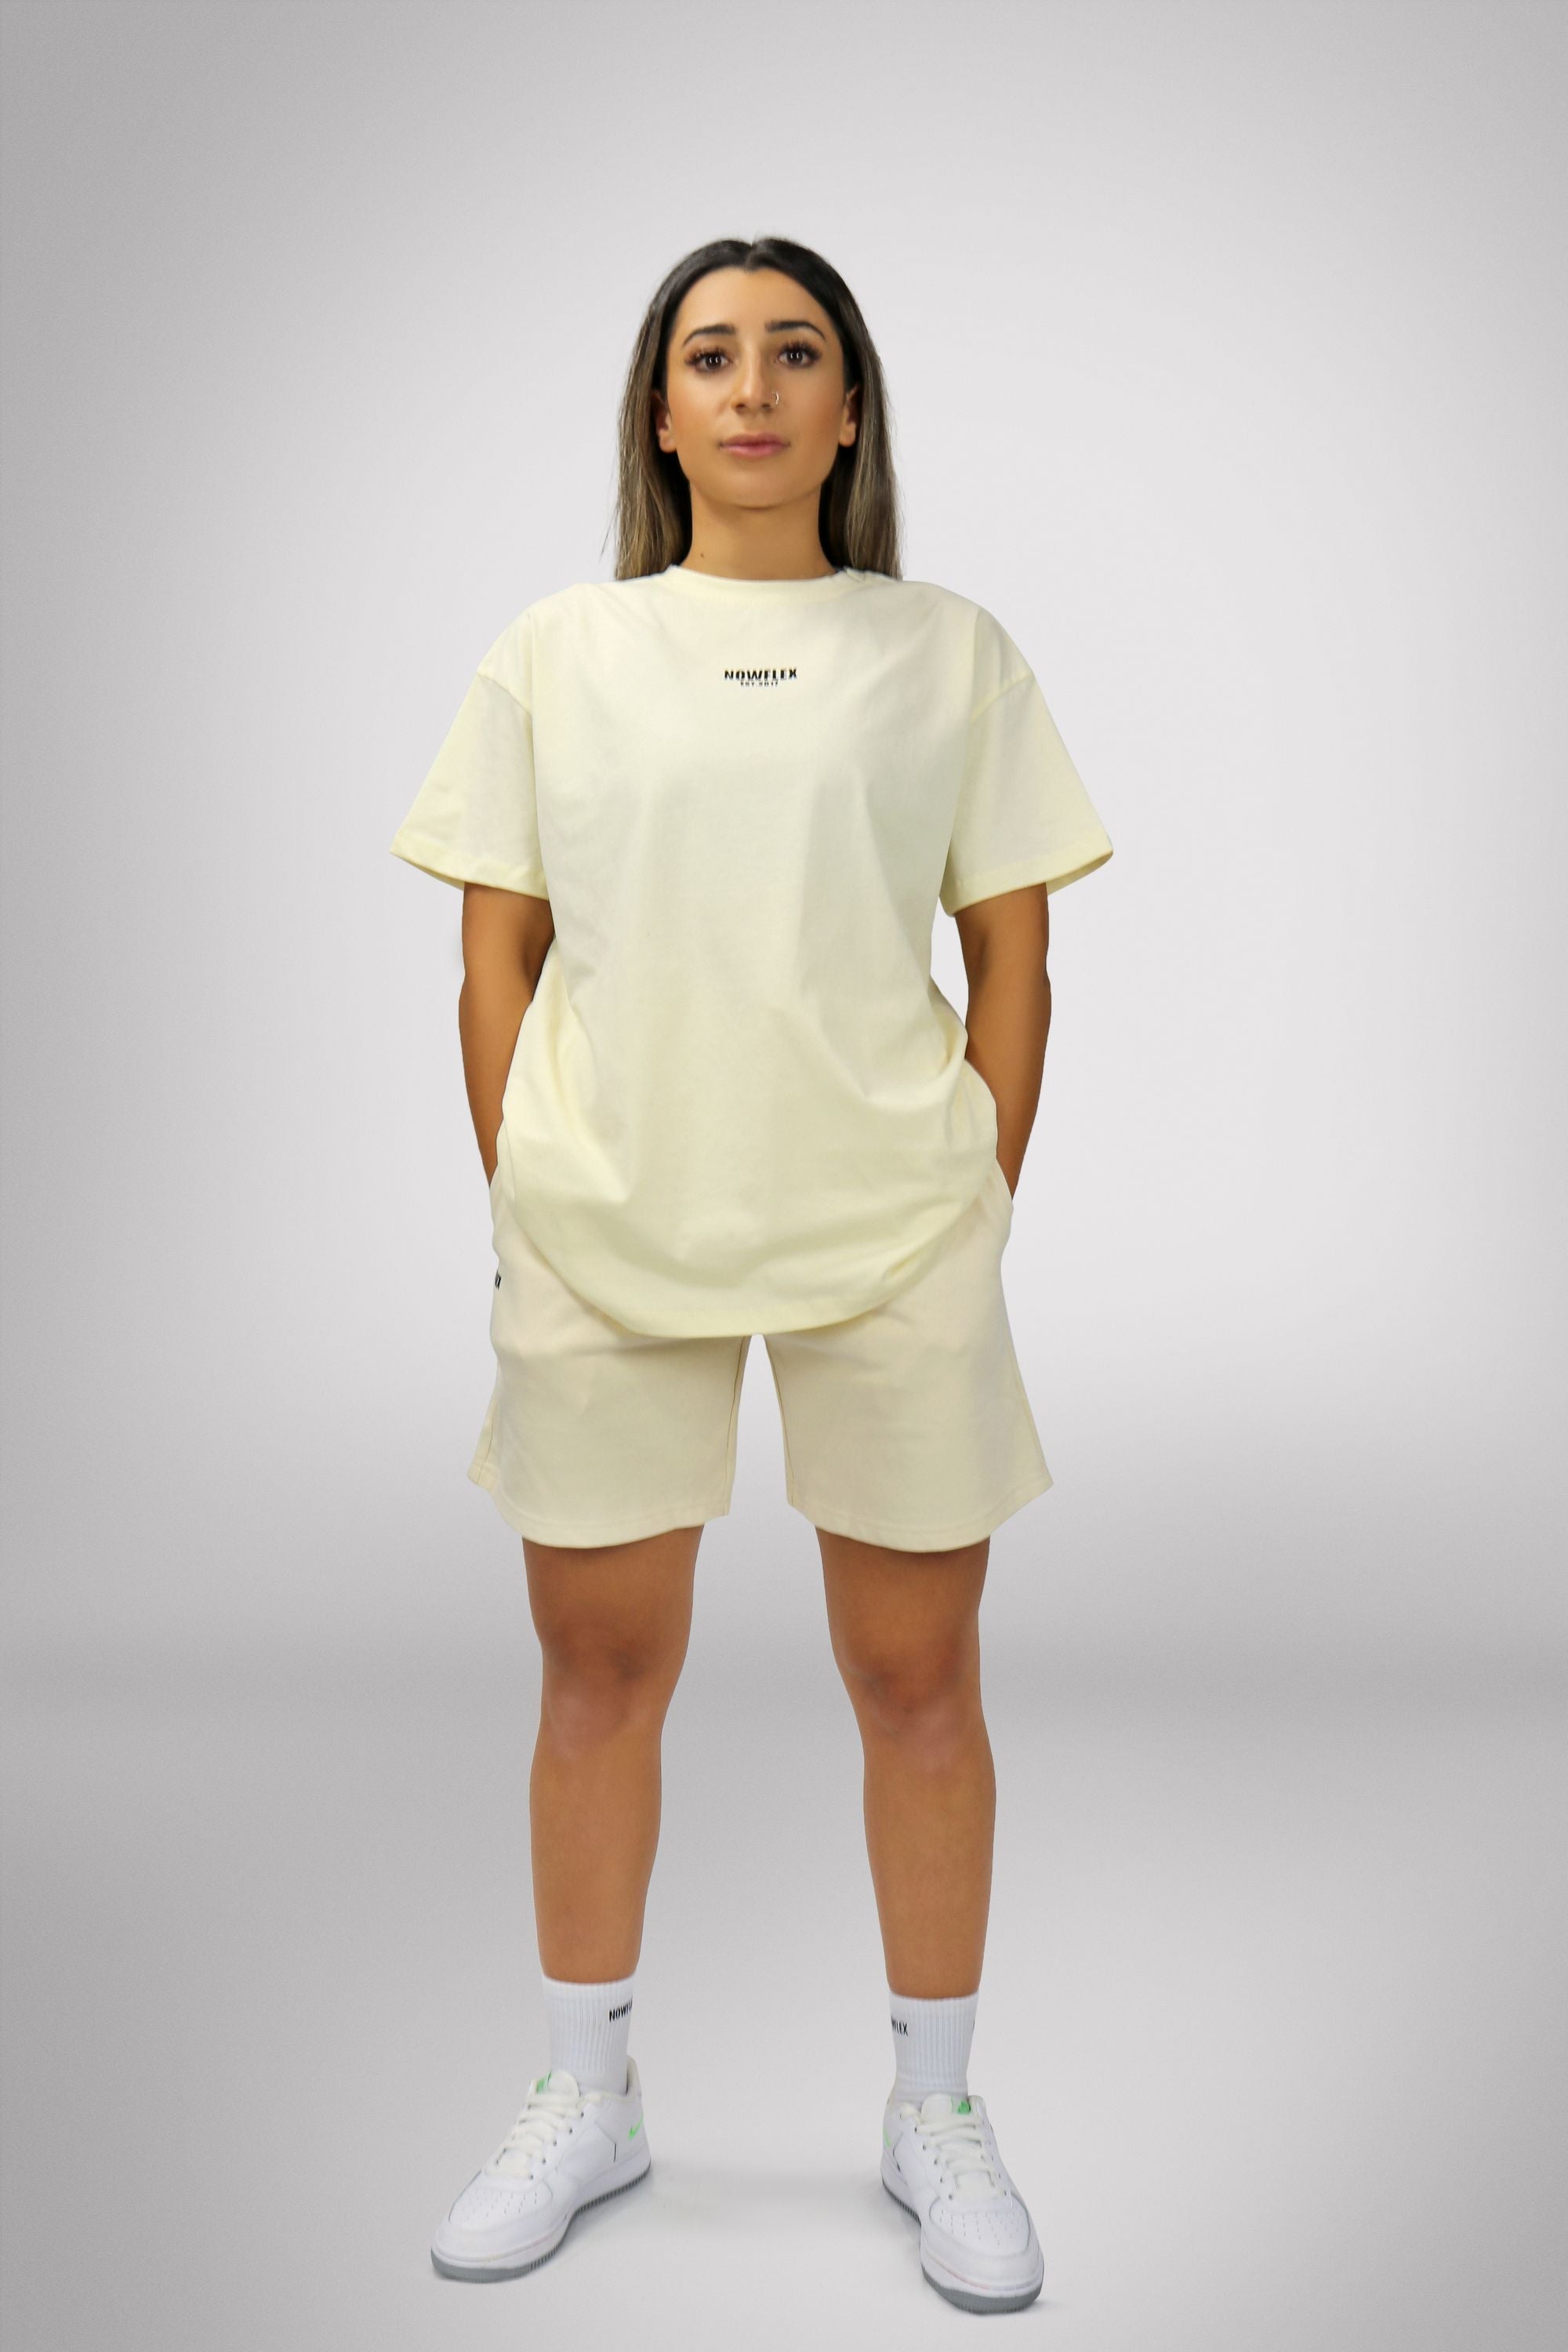 NowFLEX tshirt Basics Unisex Oversized T-Shirt - Buttercream